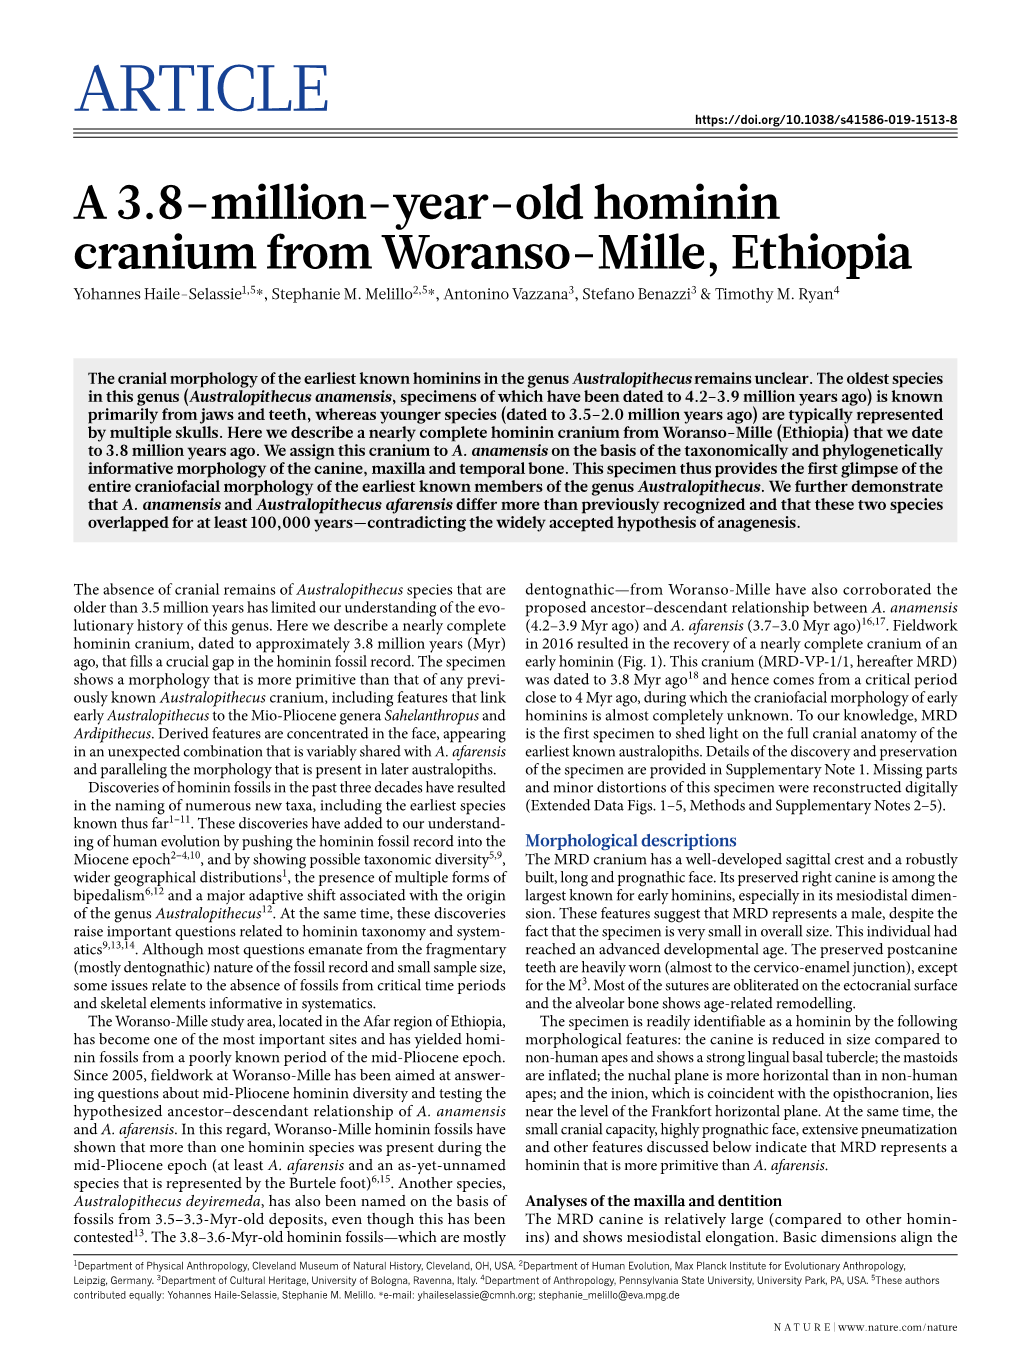 A 3.8-Million-Year-Old Hominin Cranium from Woranso-Mille, Ethiopia Yohannes Haile-Selassie1,5*, Stephanie M